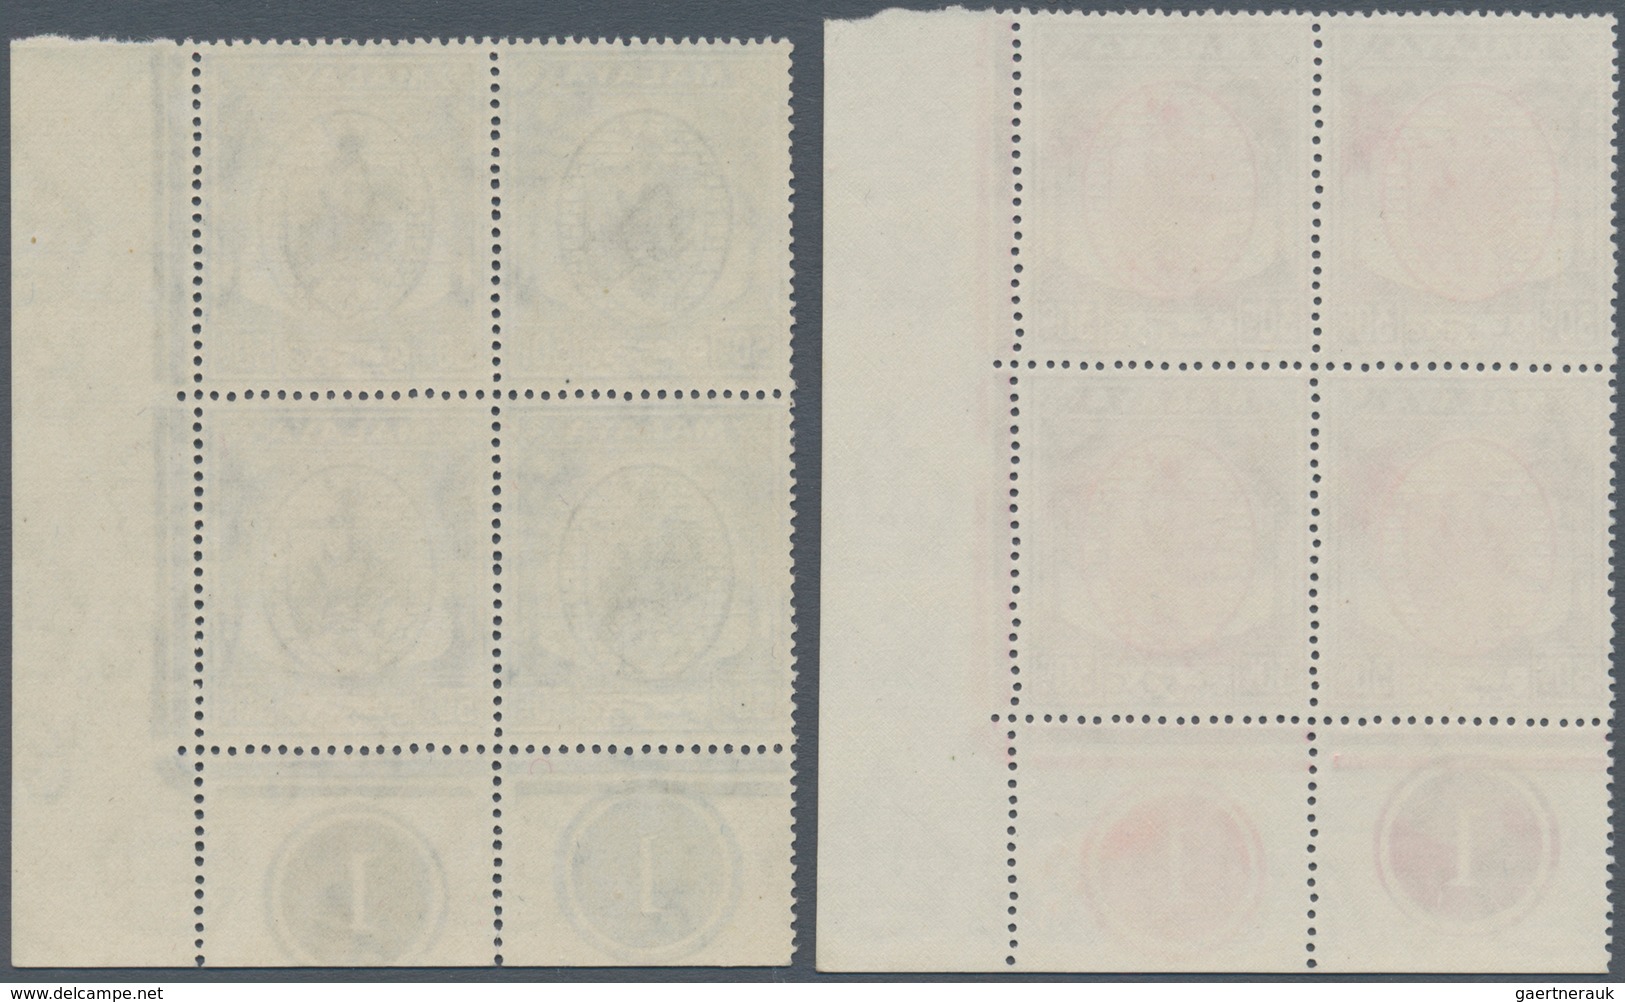 Malaiische Staaten - Negri Sembilan: 1949/1952, Definitives Coat Of Arms, 2c., 4c., 6c. (creasing), - Negri Sembilan